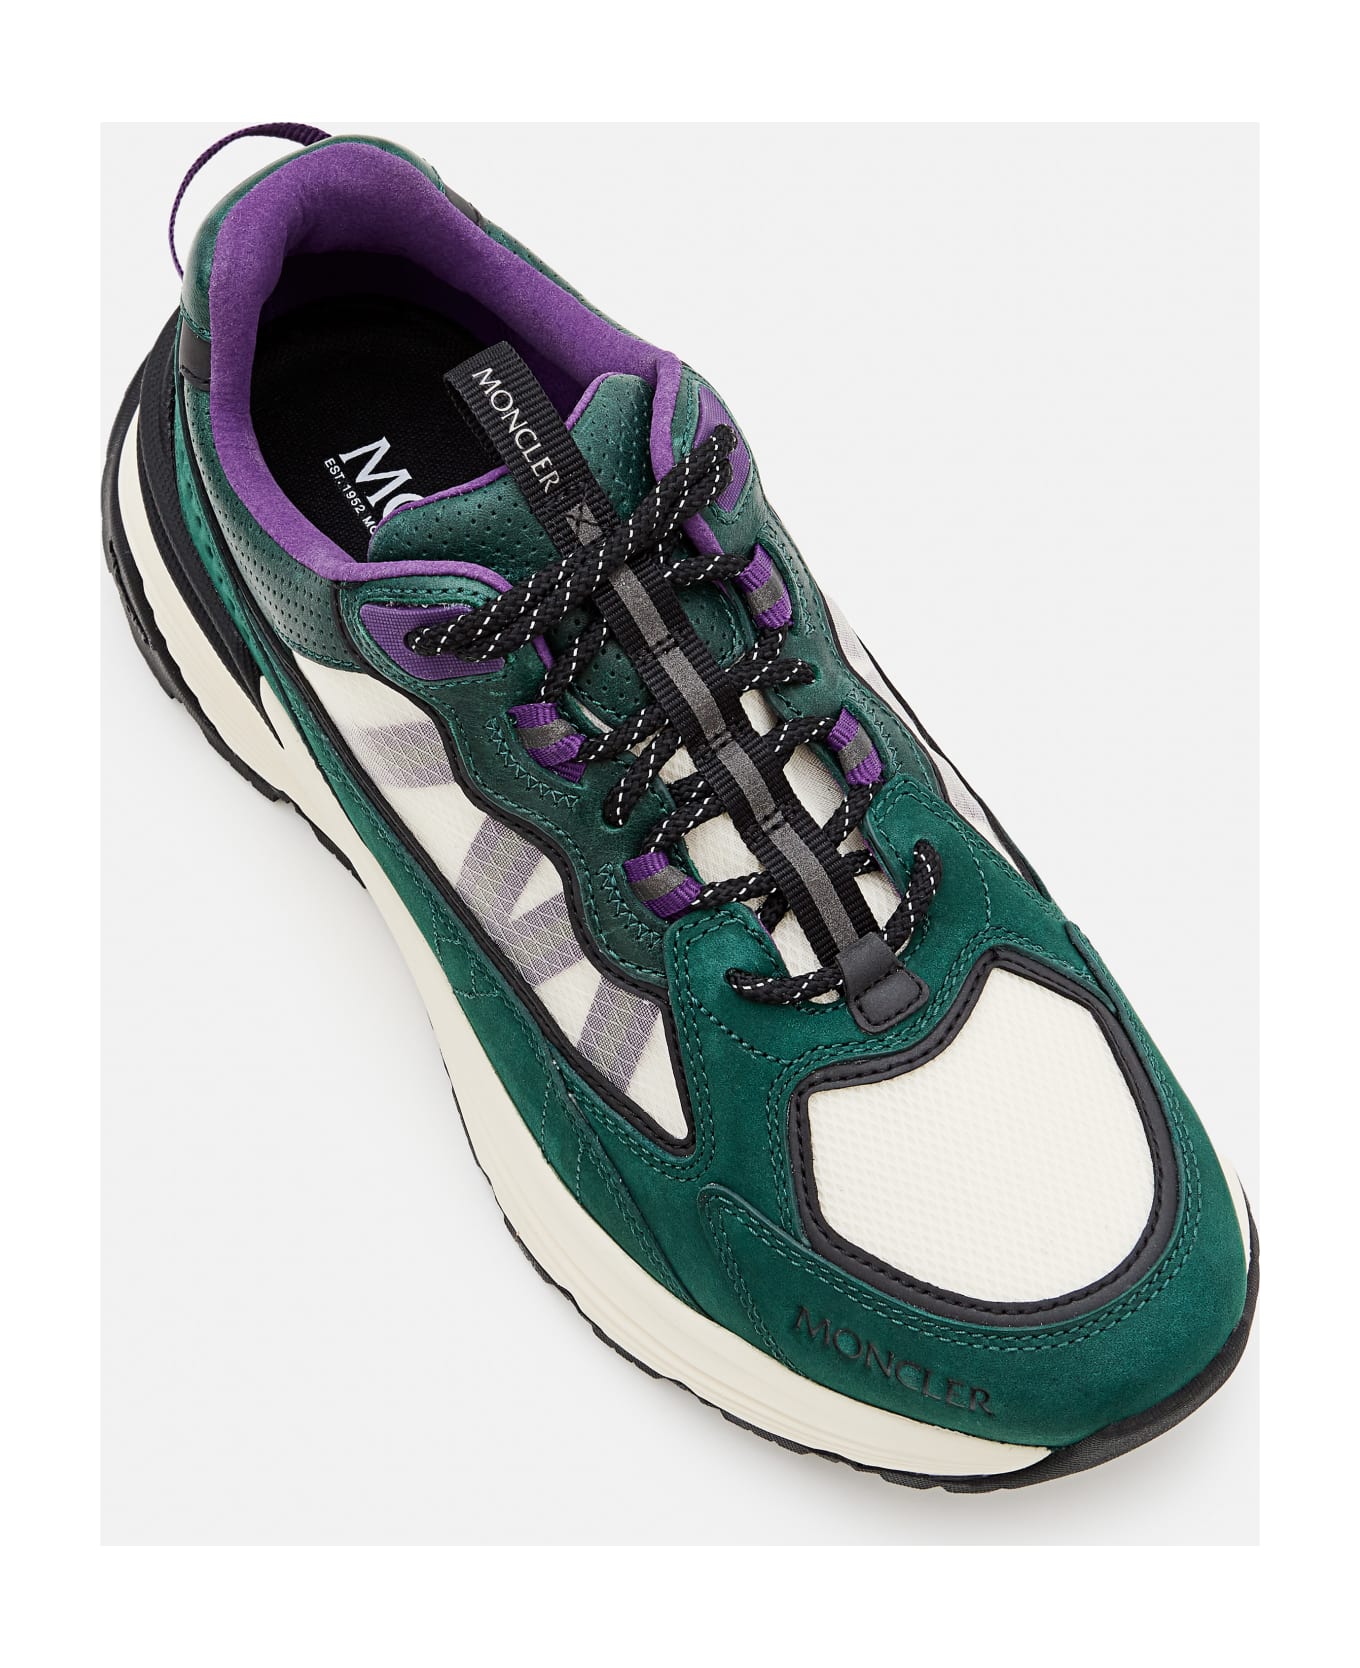 Moncler Lite Runner Low Top Sneakers - Green